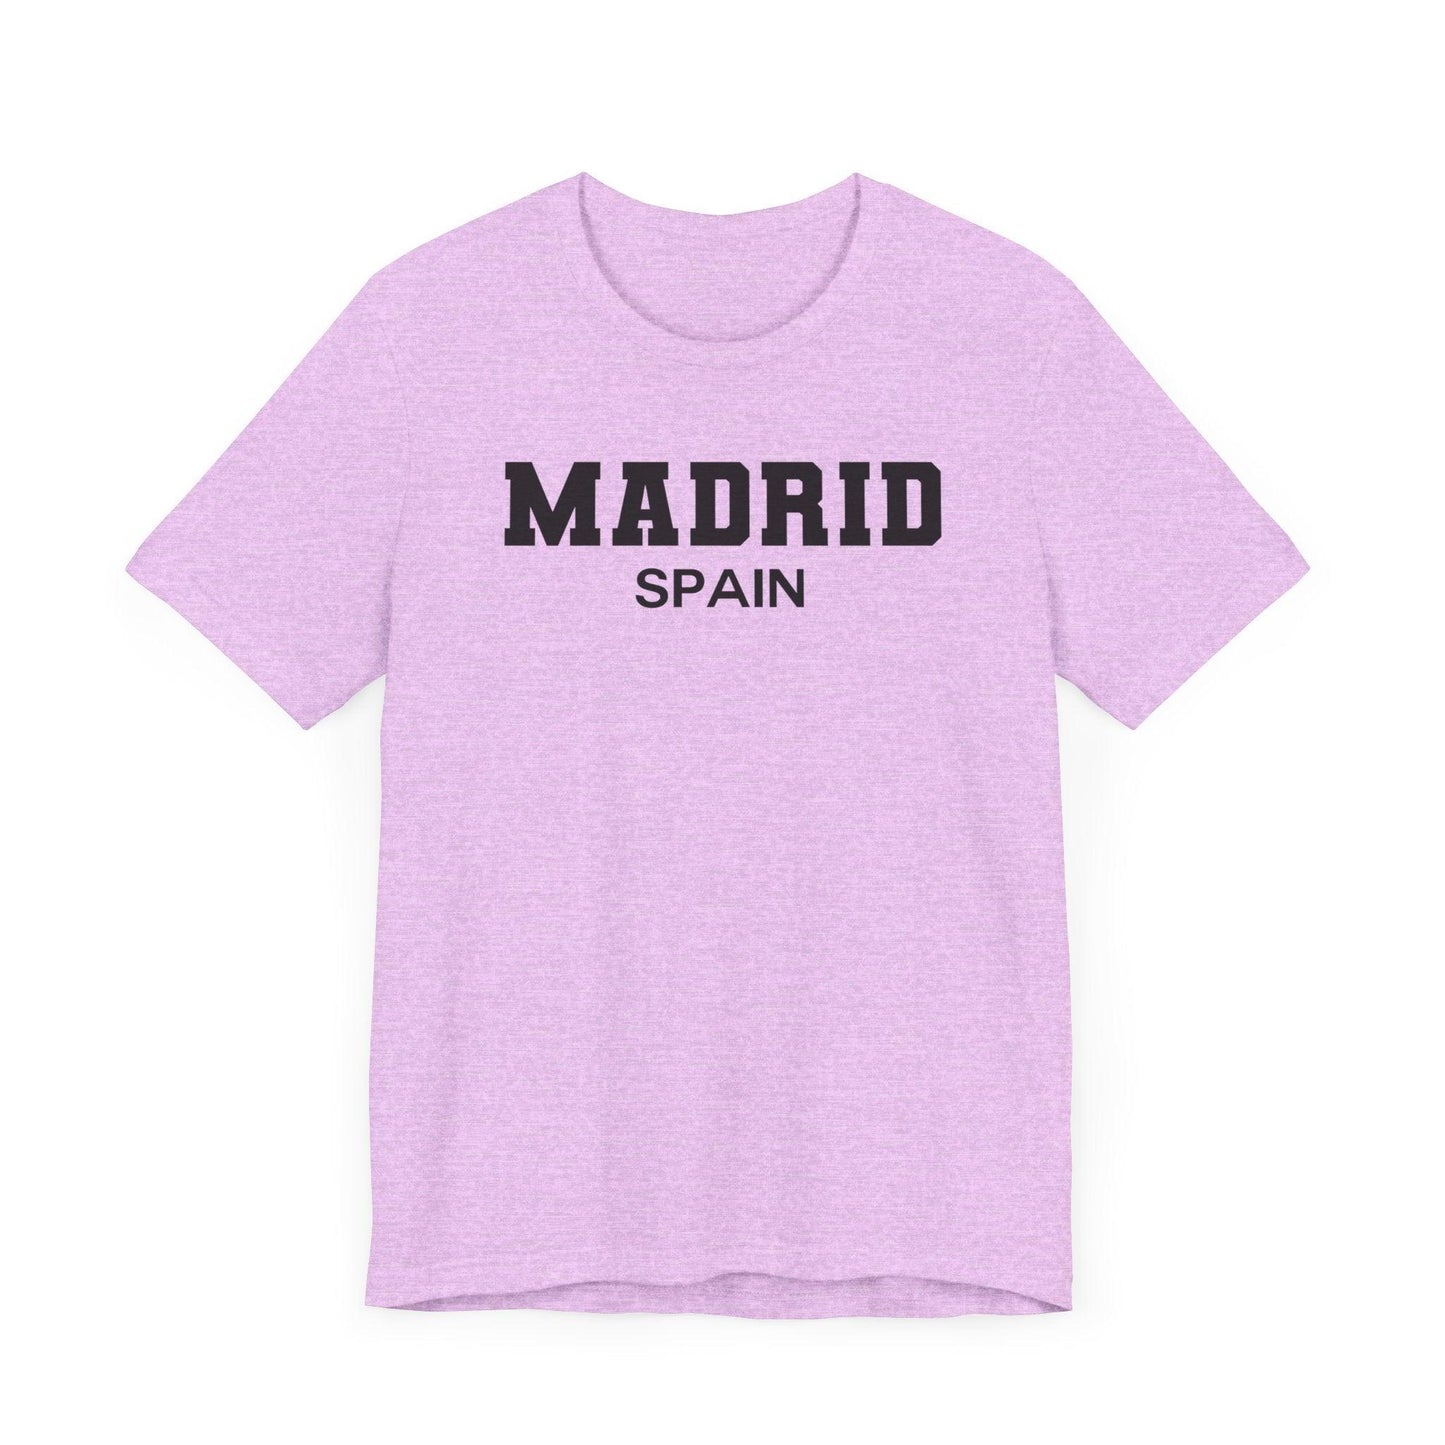 Madrid Spain T-shirt - BentleyBlueCo